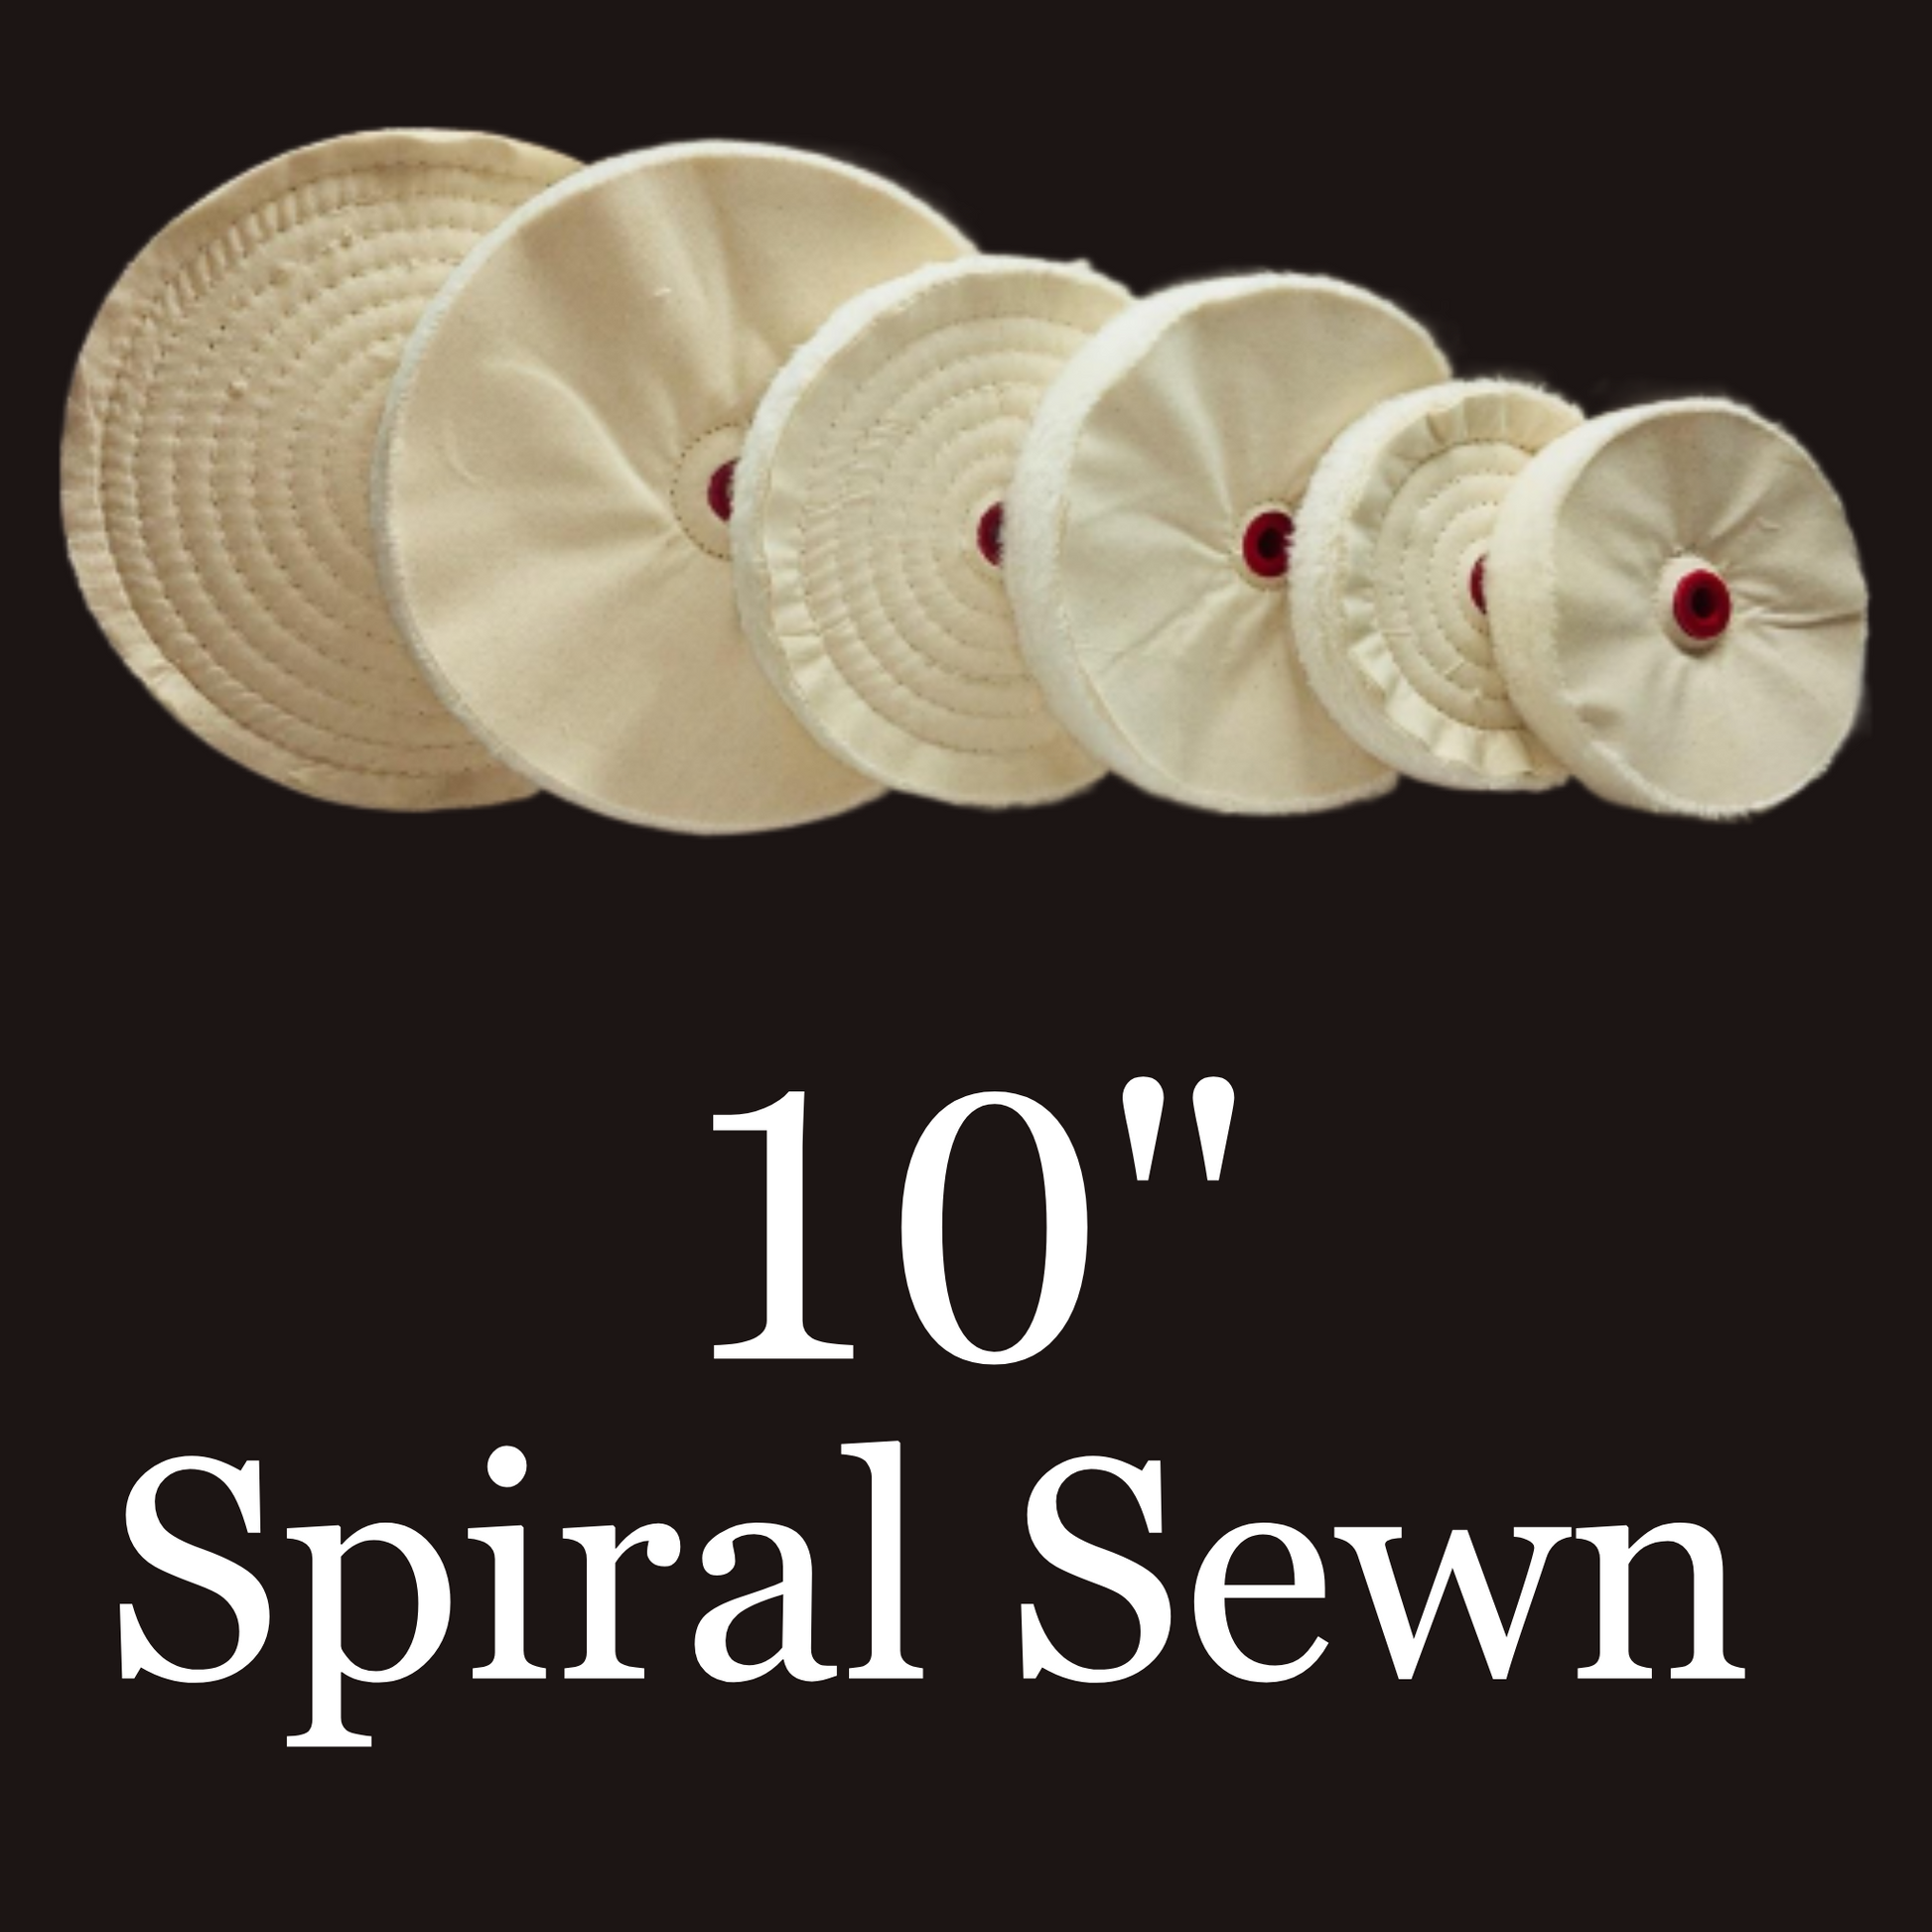 Spiral Sewn Cotton Buffing 10” Wheels